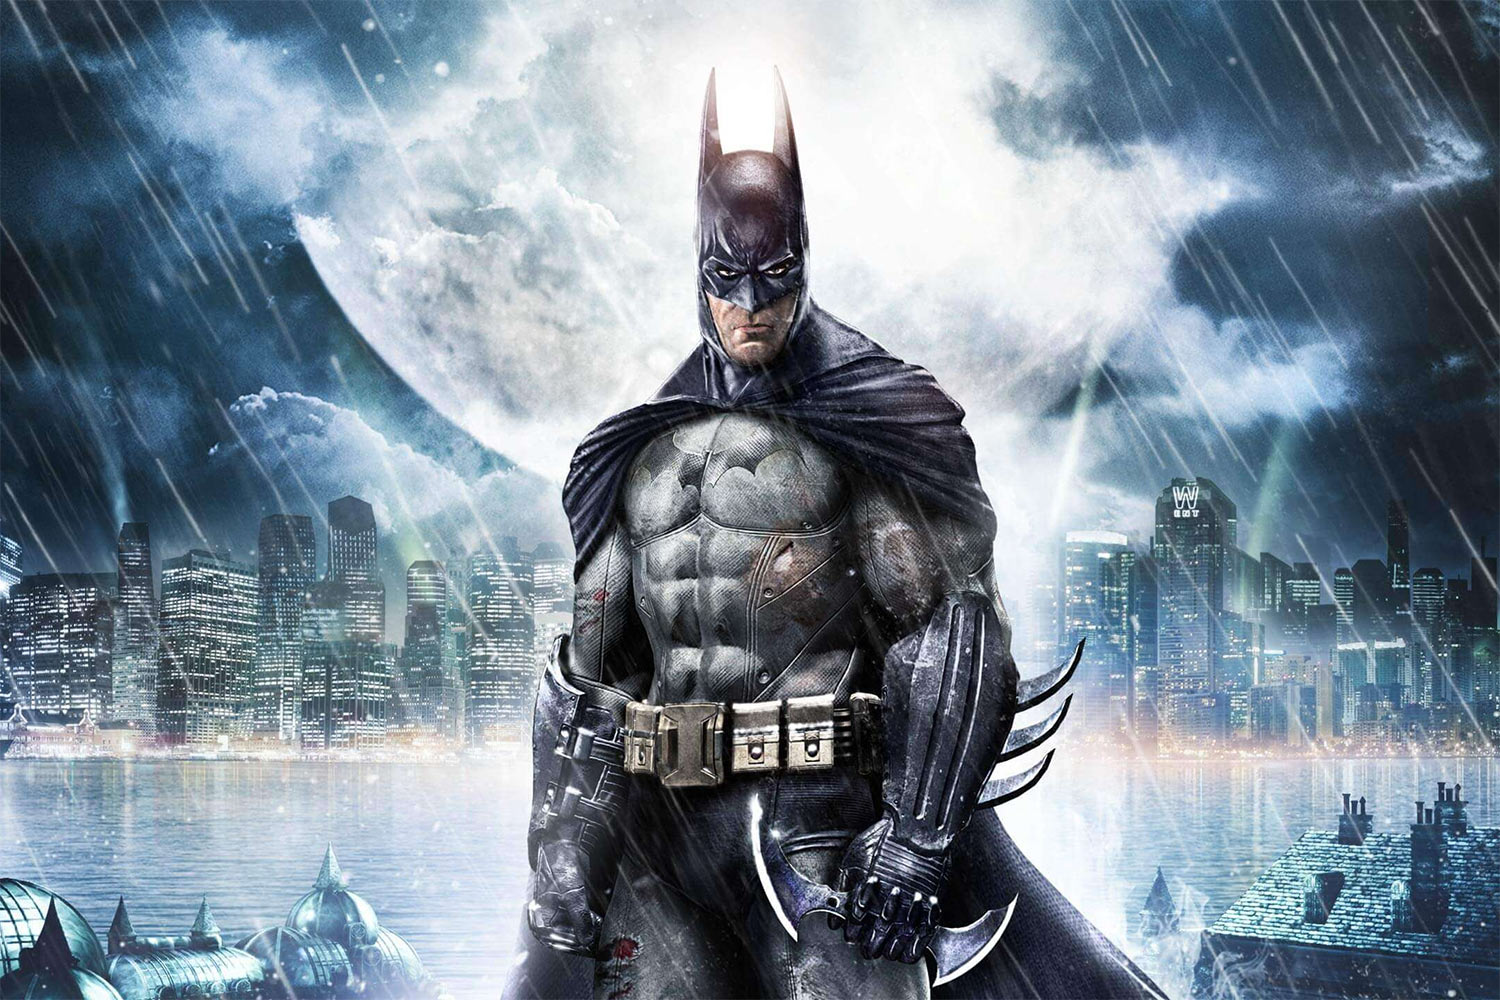 Batman: Arkham Unhinged, Vol. 1 review